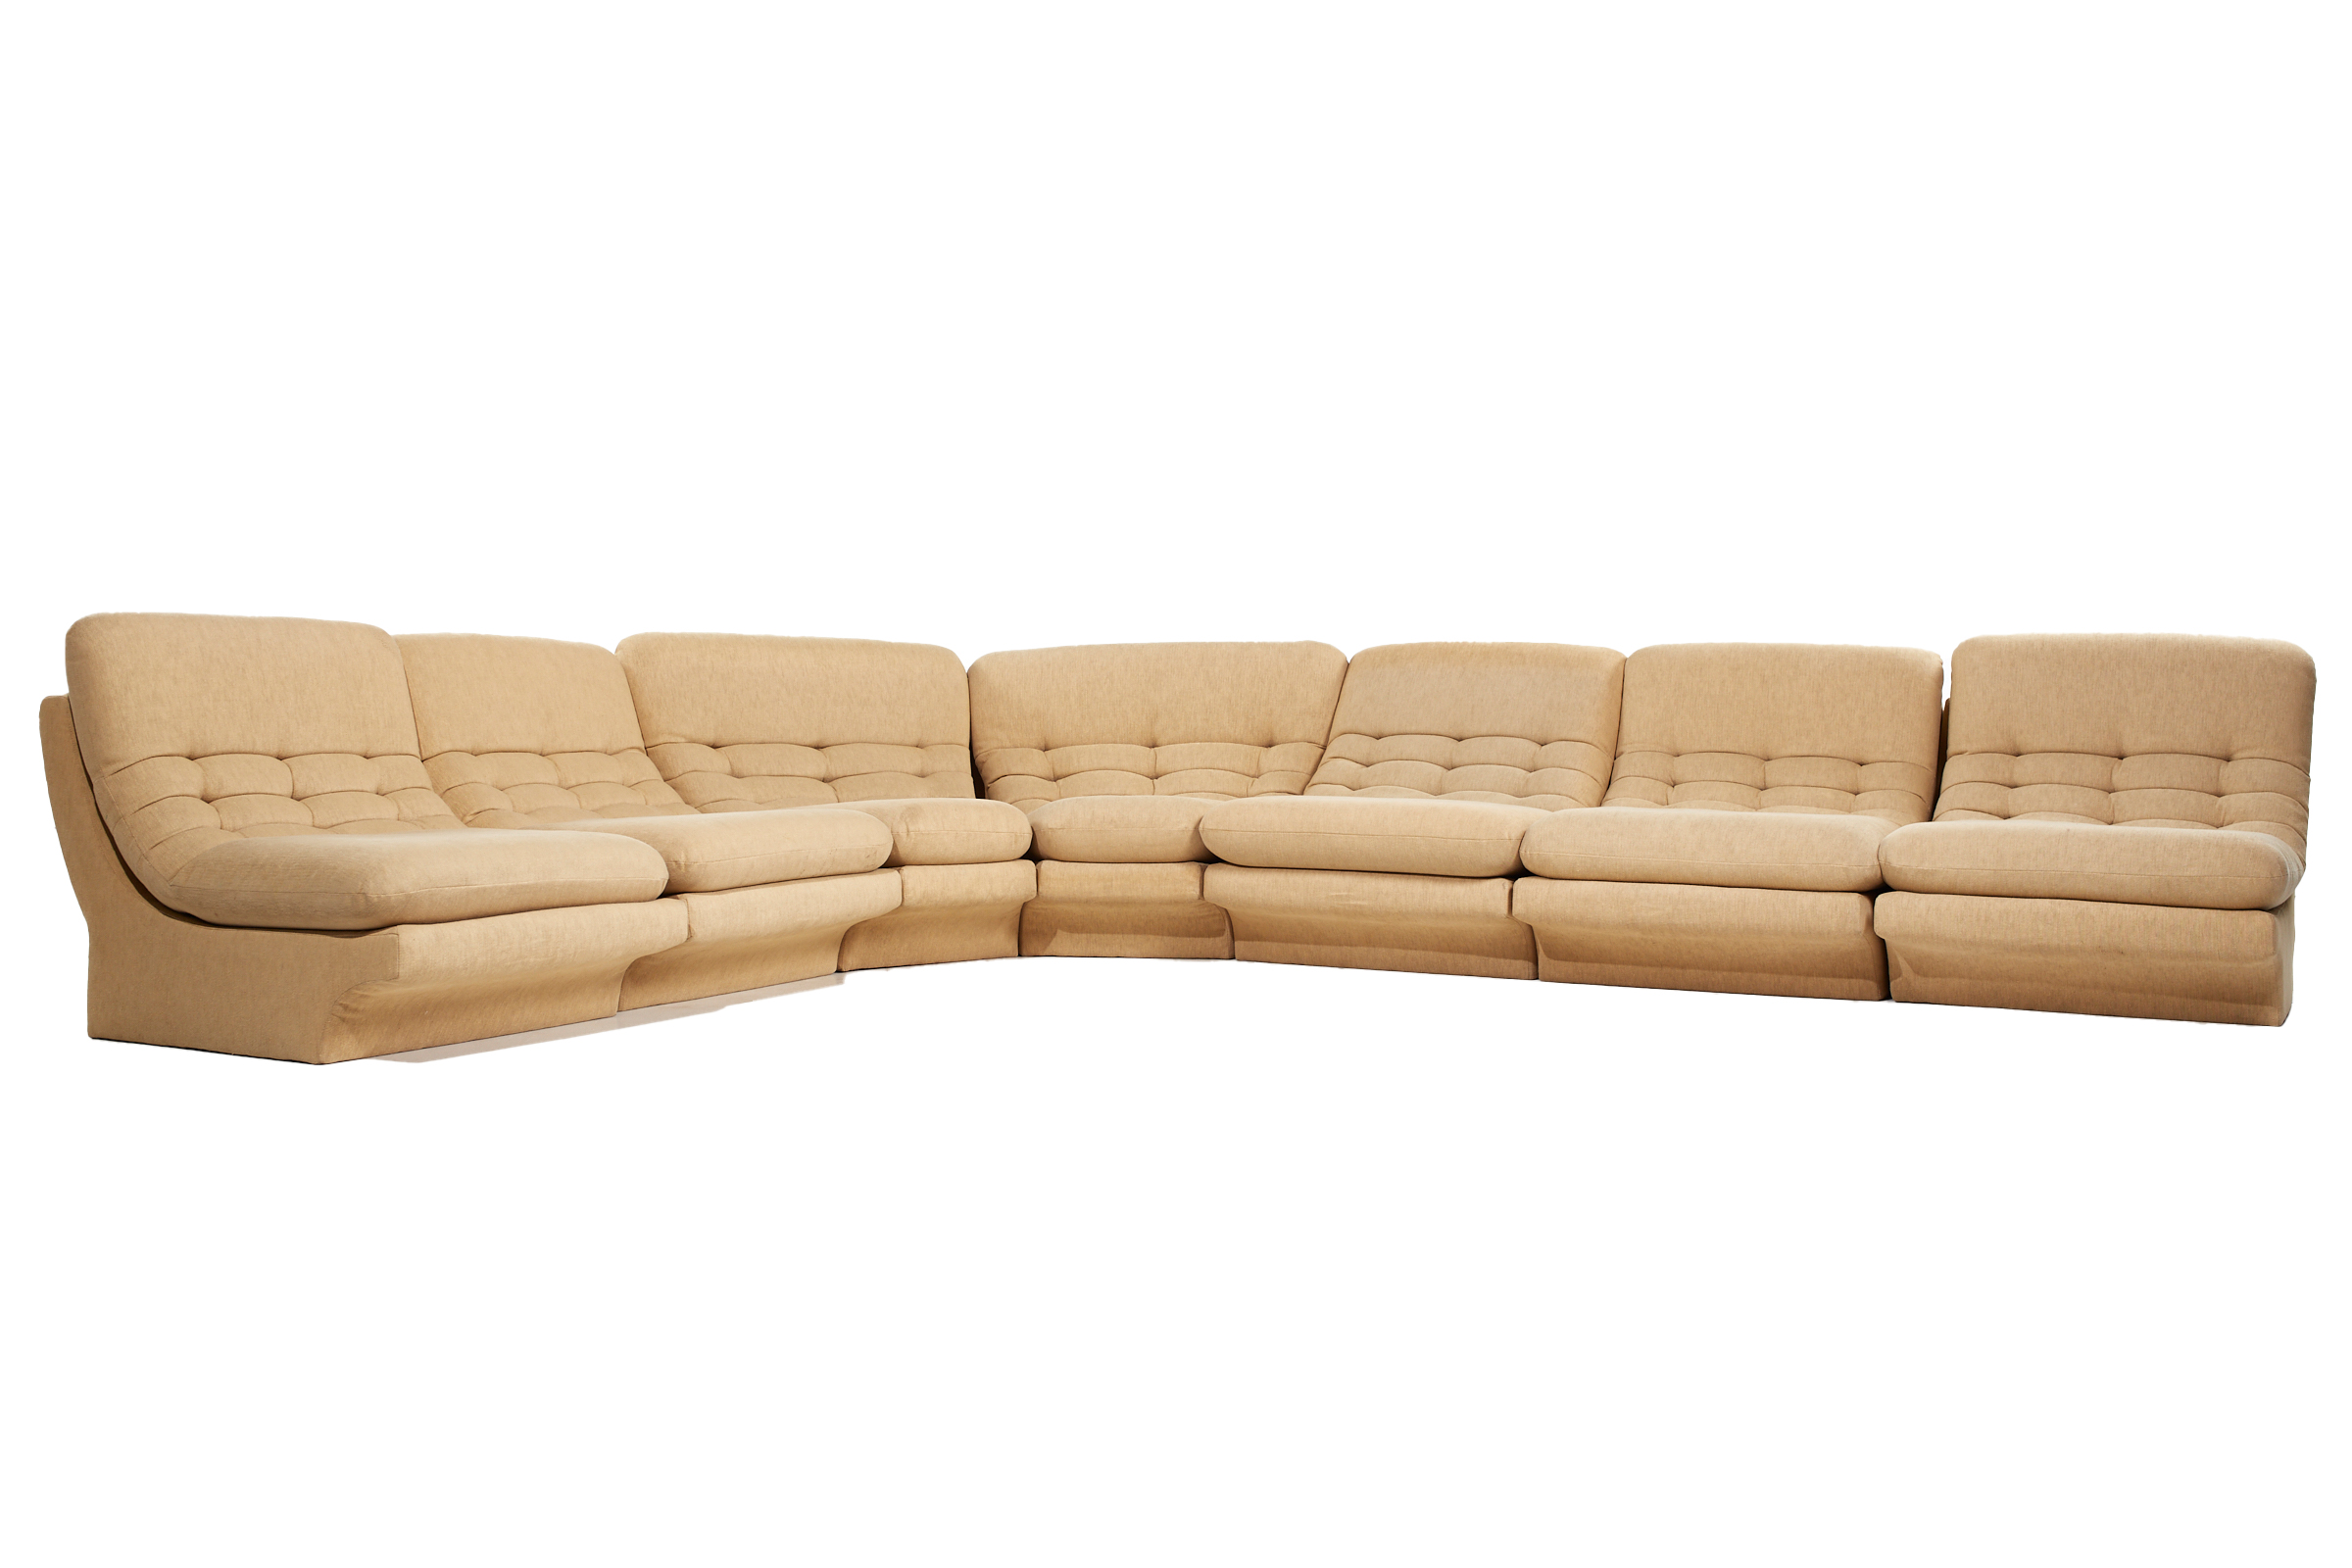 vladimir kagan style mid century sectional sofa